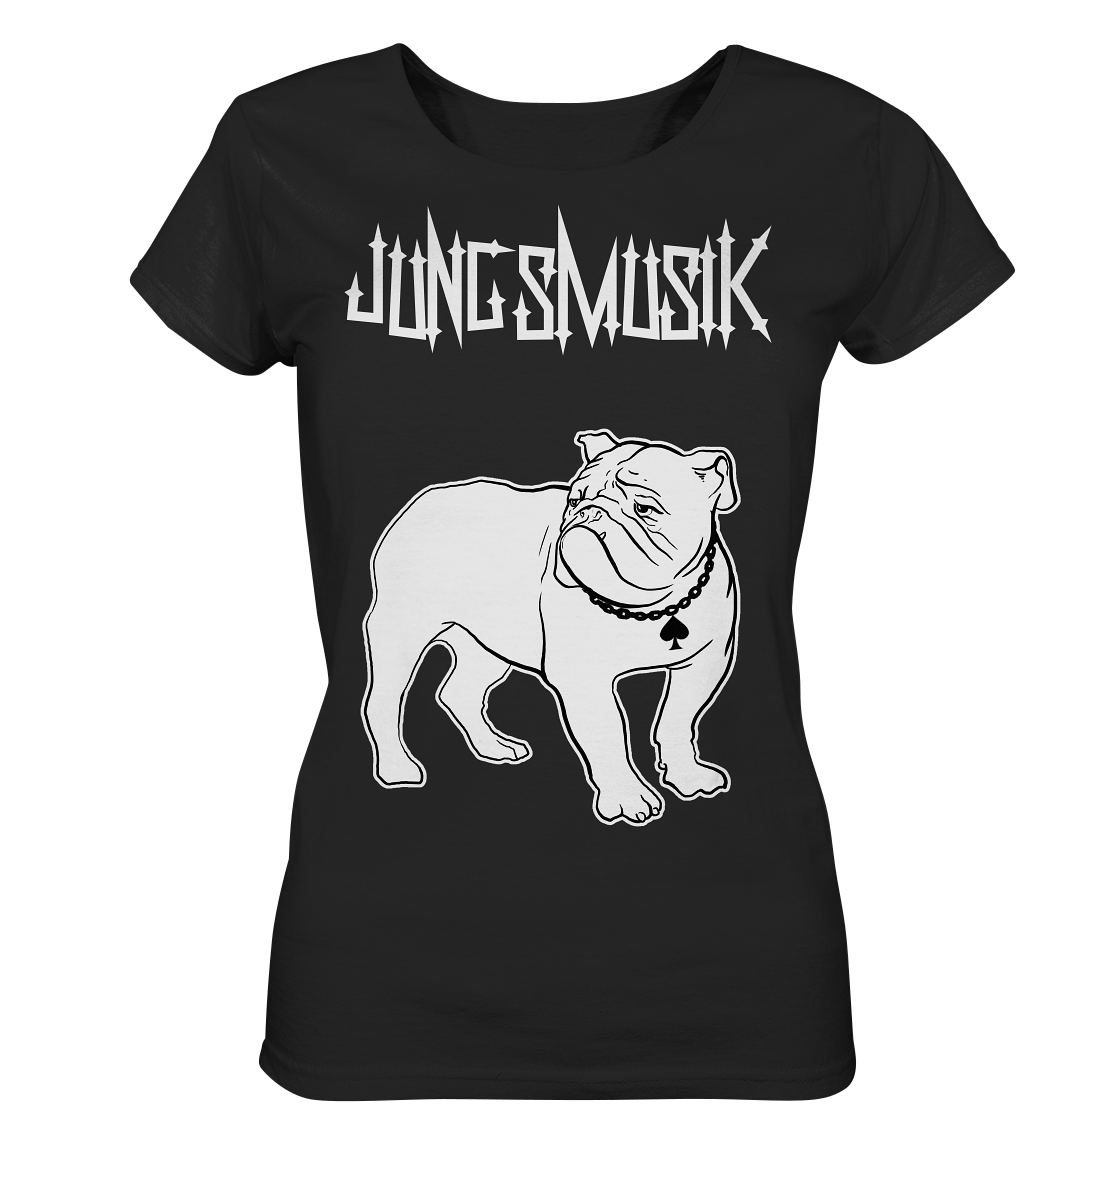 Artbookings - Micha-El Goehre: Jungsmusik - T-Shirt mit Bulldogge Lemmy - weiblicher Schnitt, Merchandise.